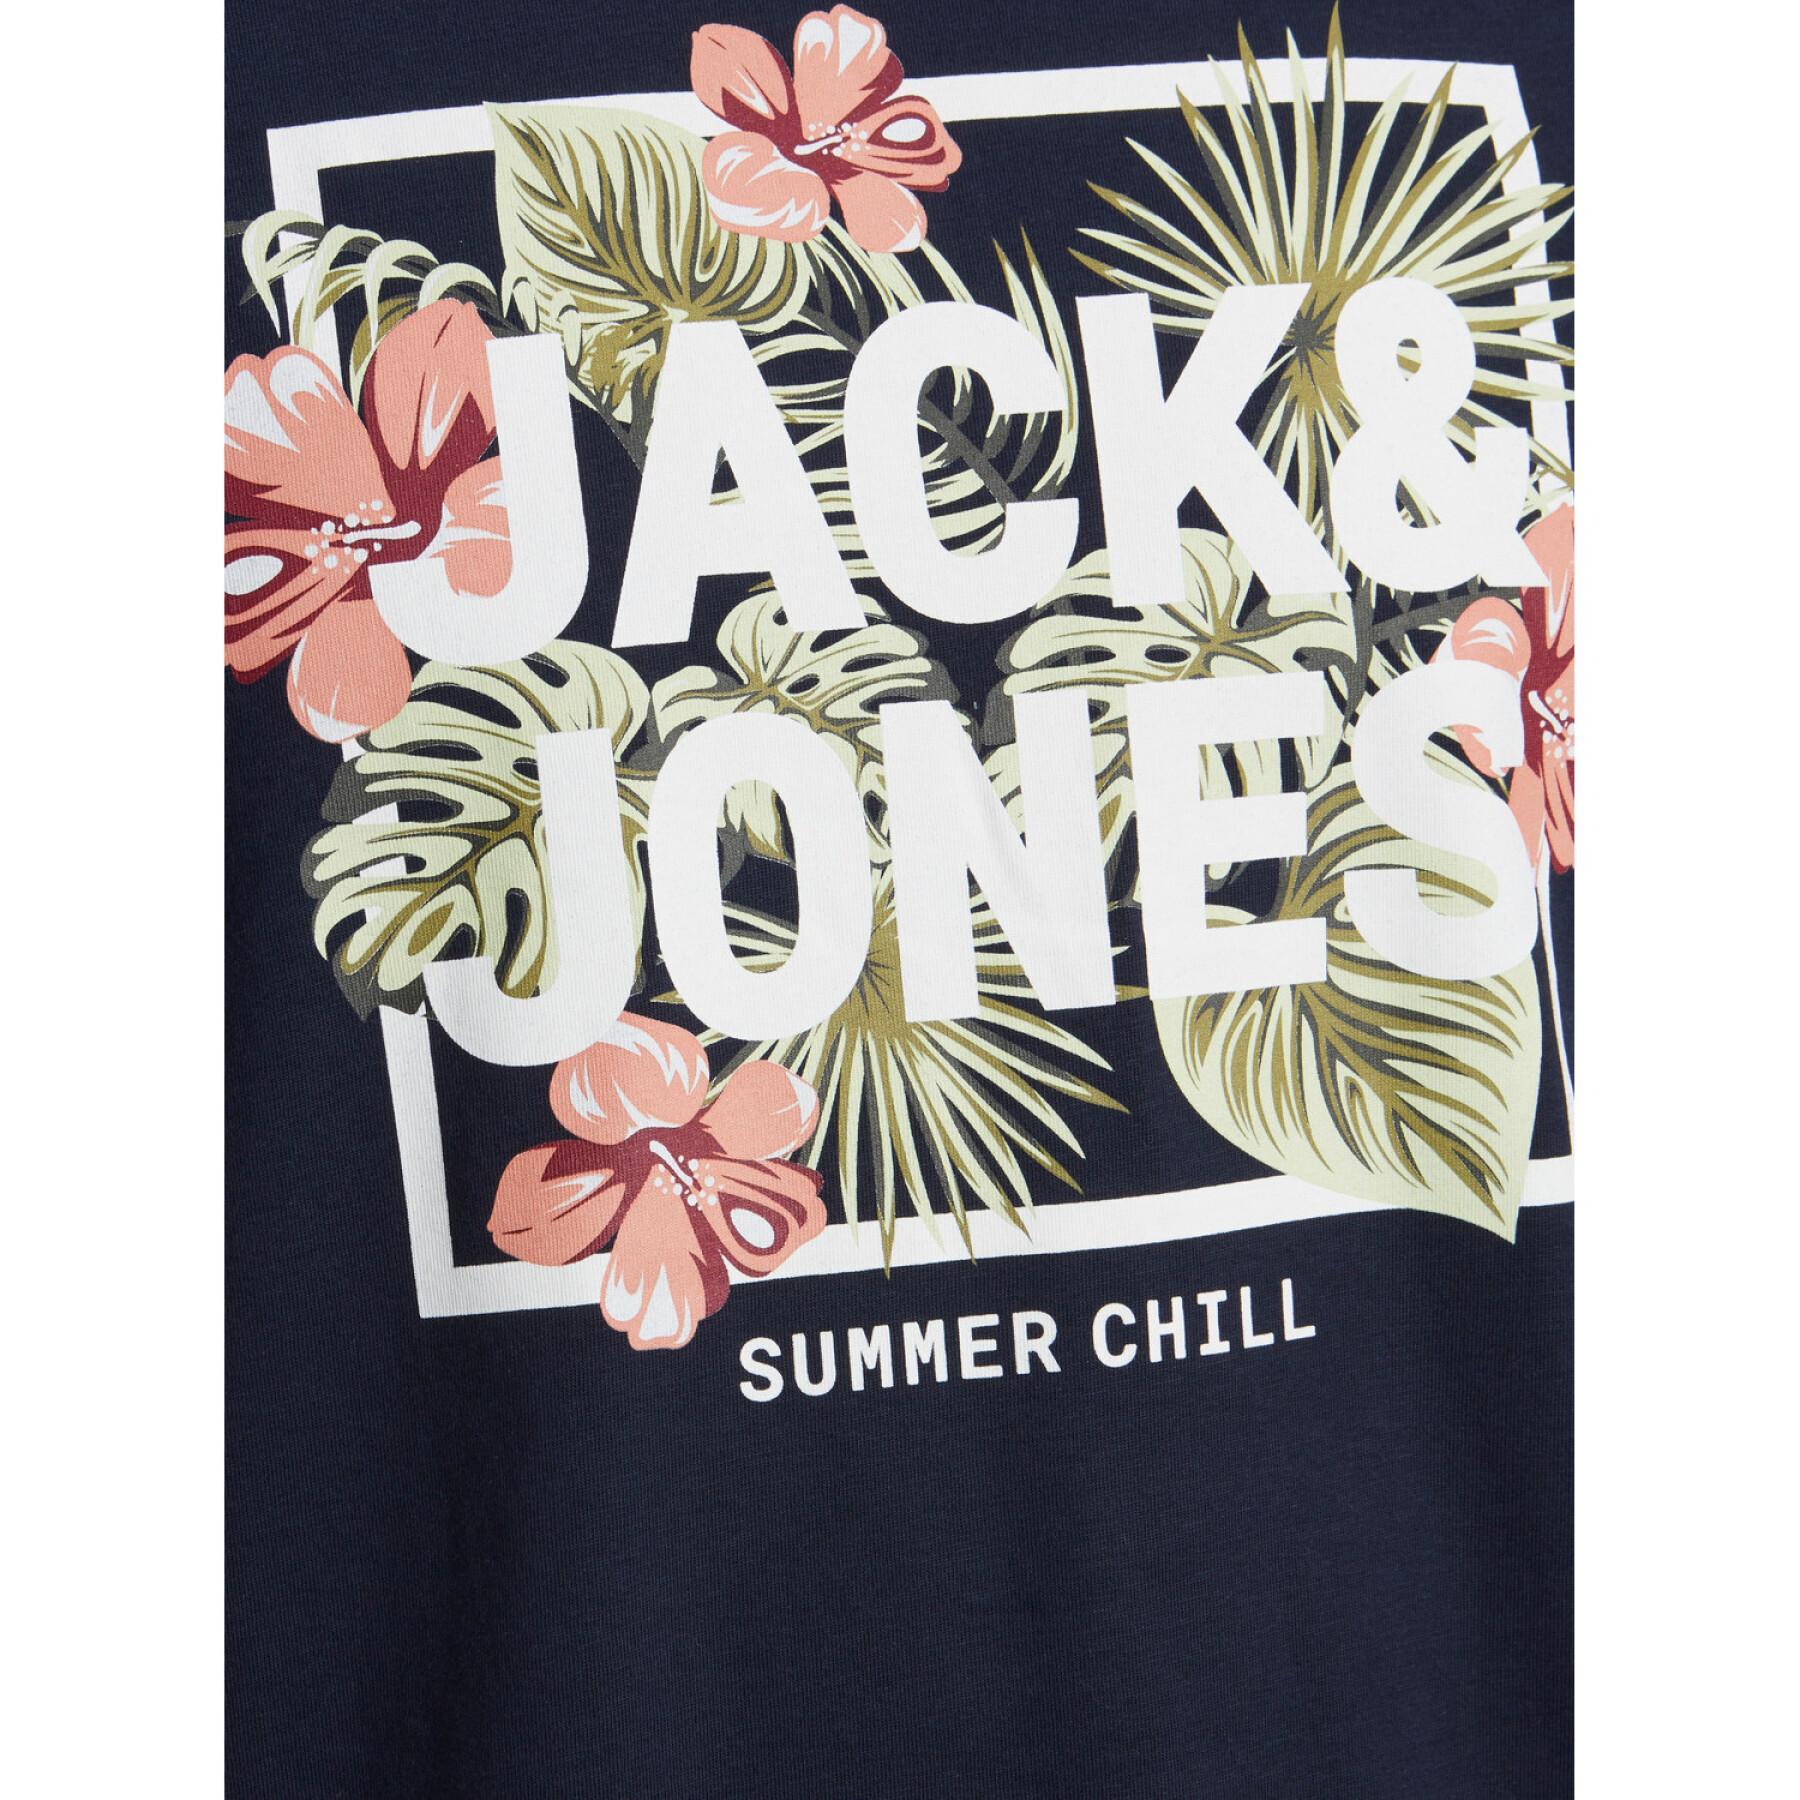 Camiseta Jack & Jones Becs